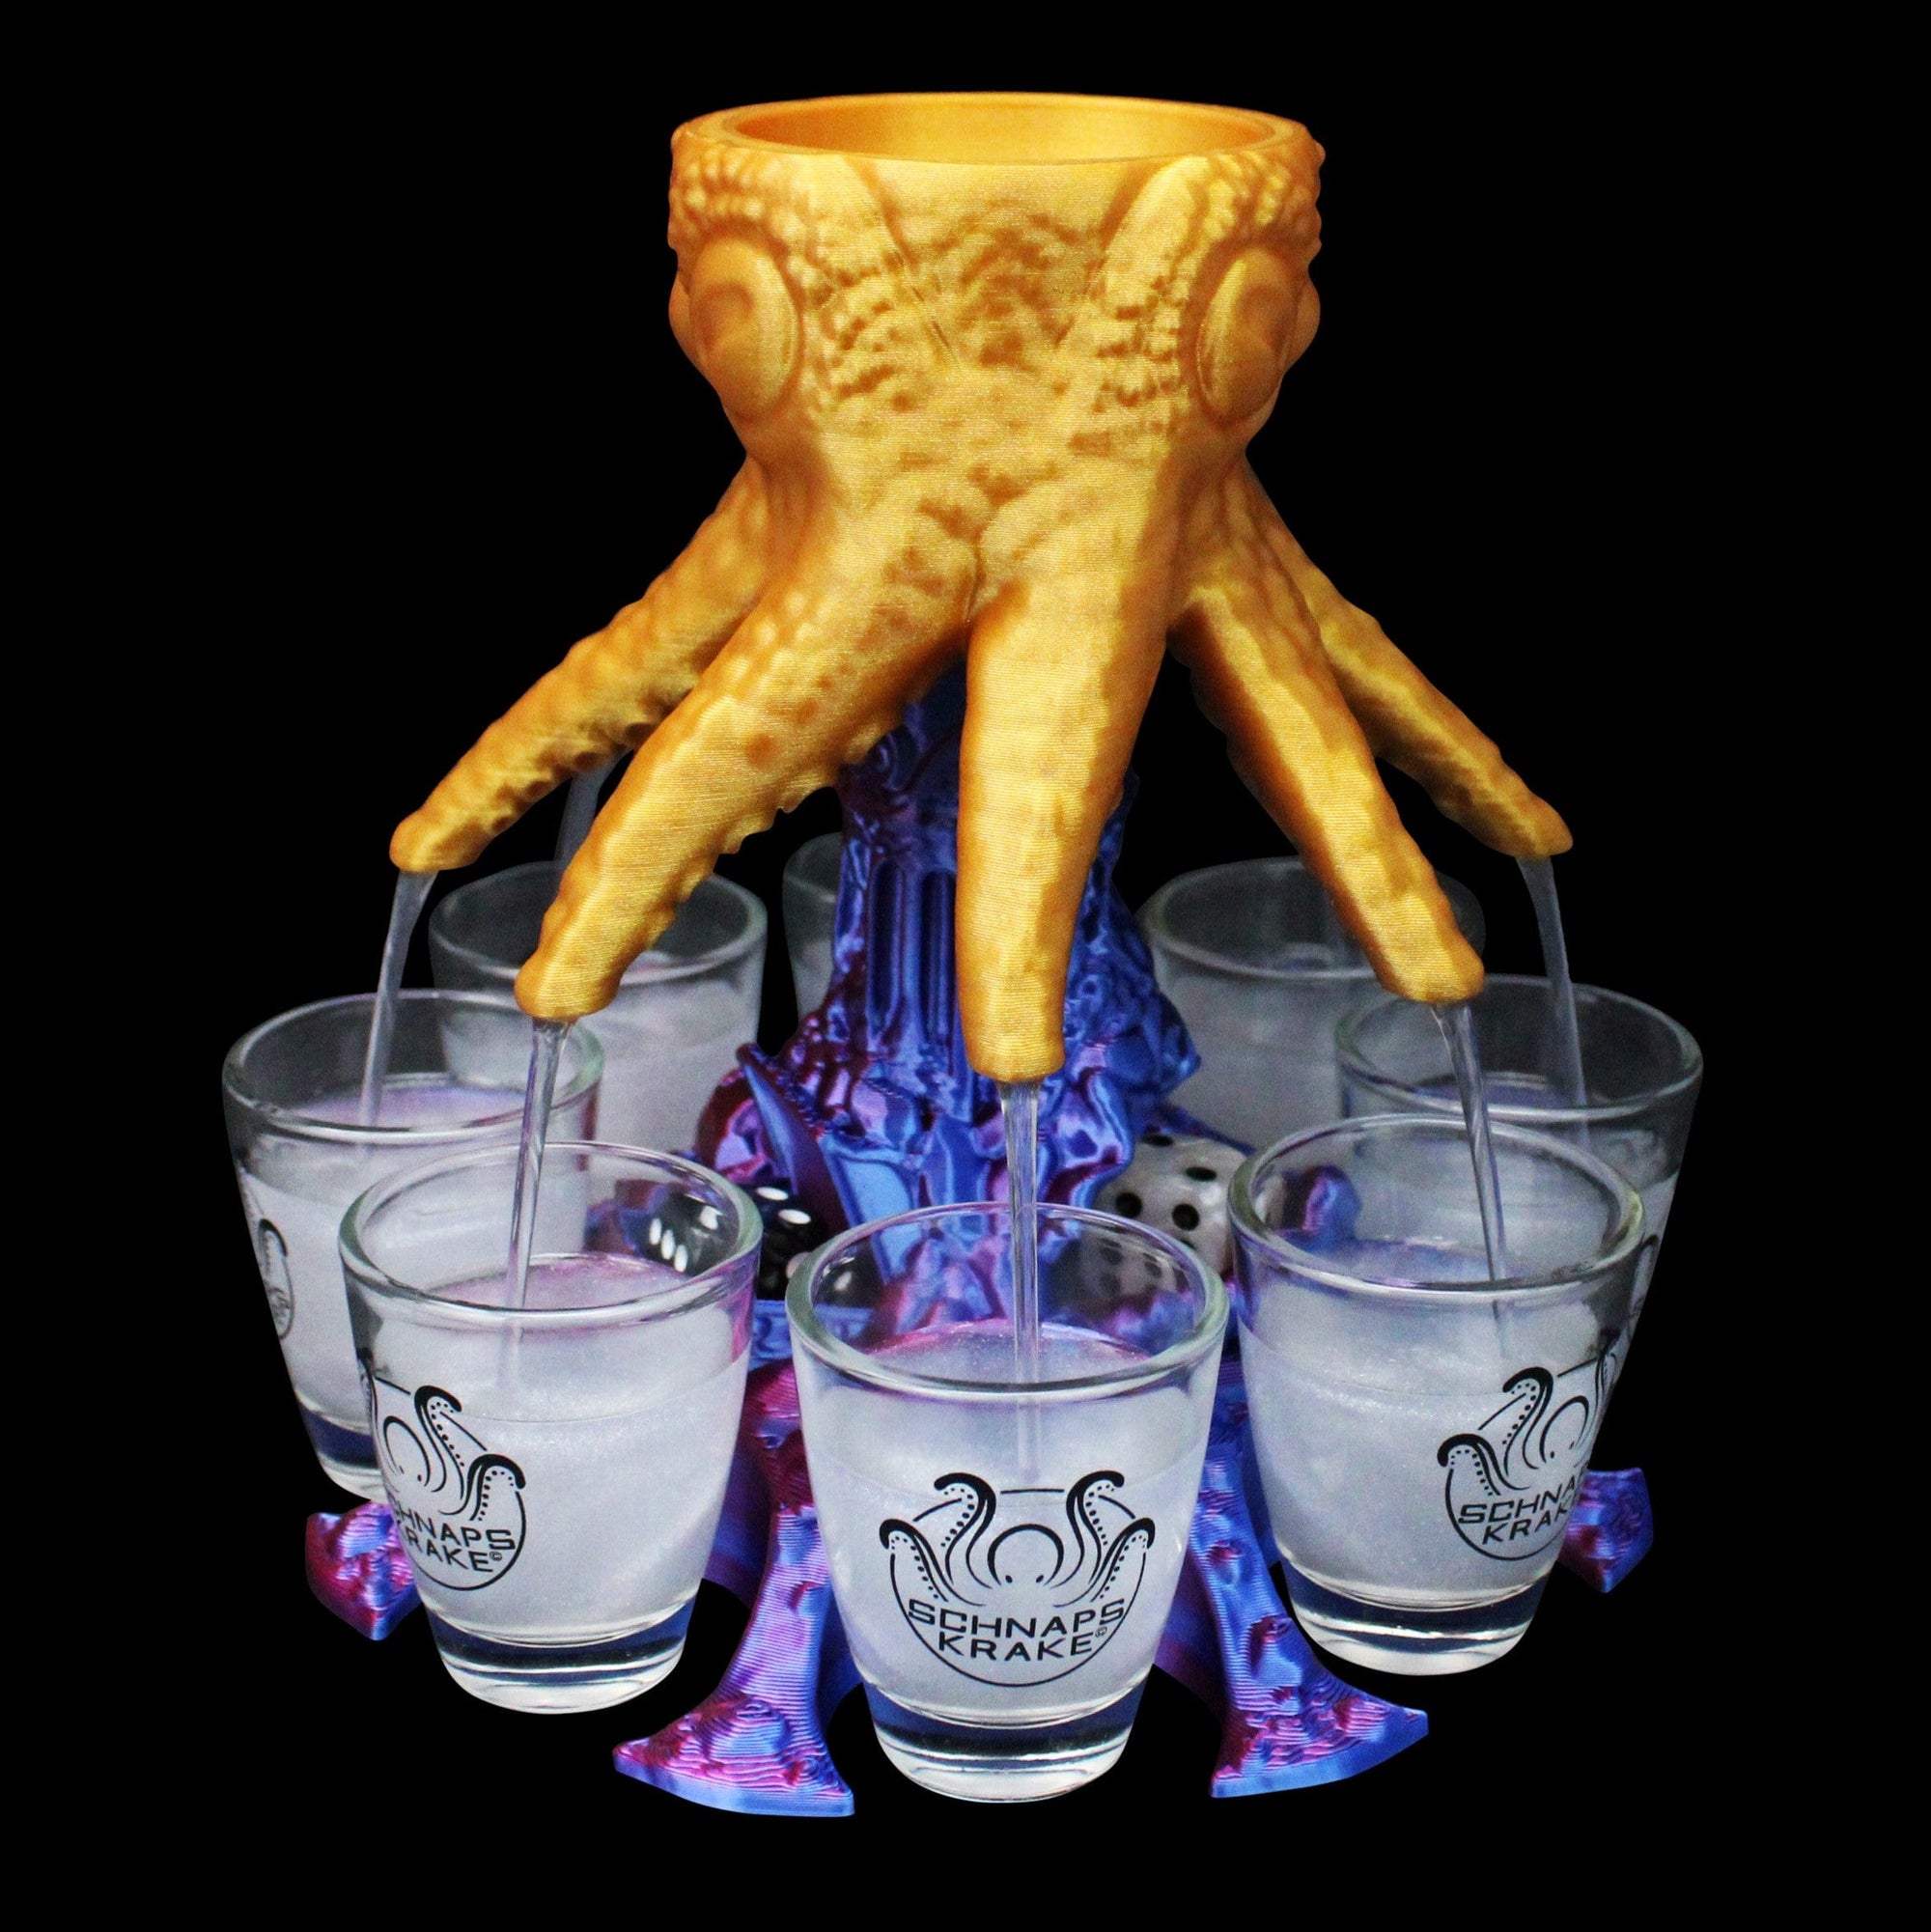 Königskrake Mystic lila wird mit Alkohol befüllt